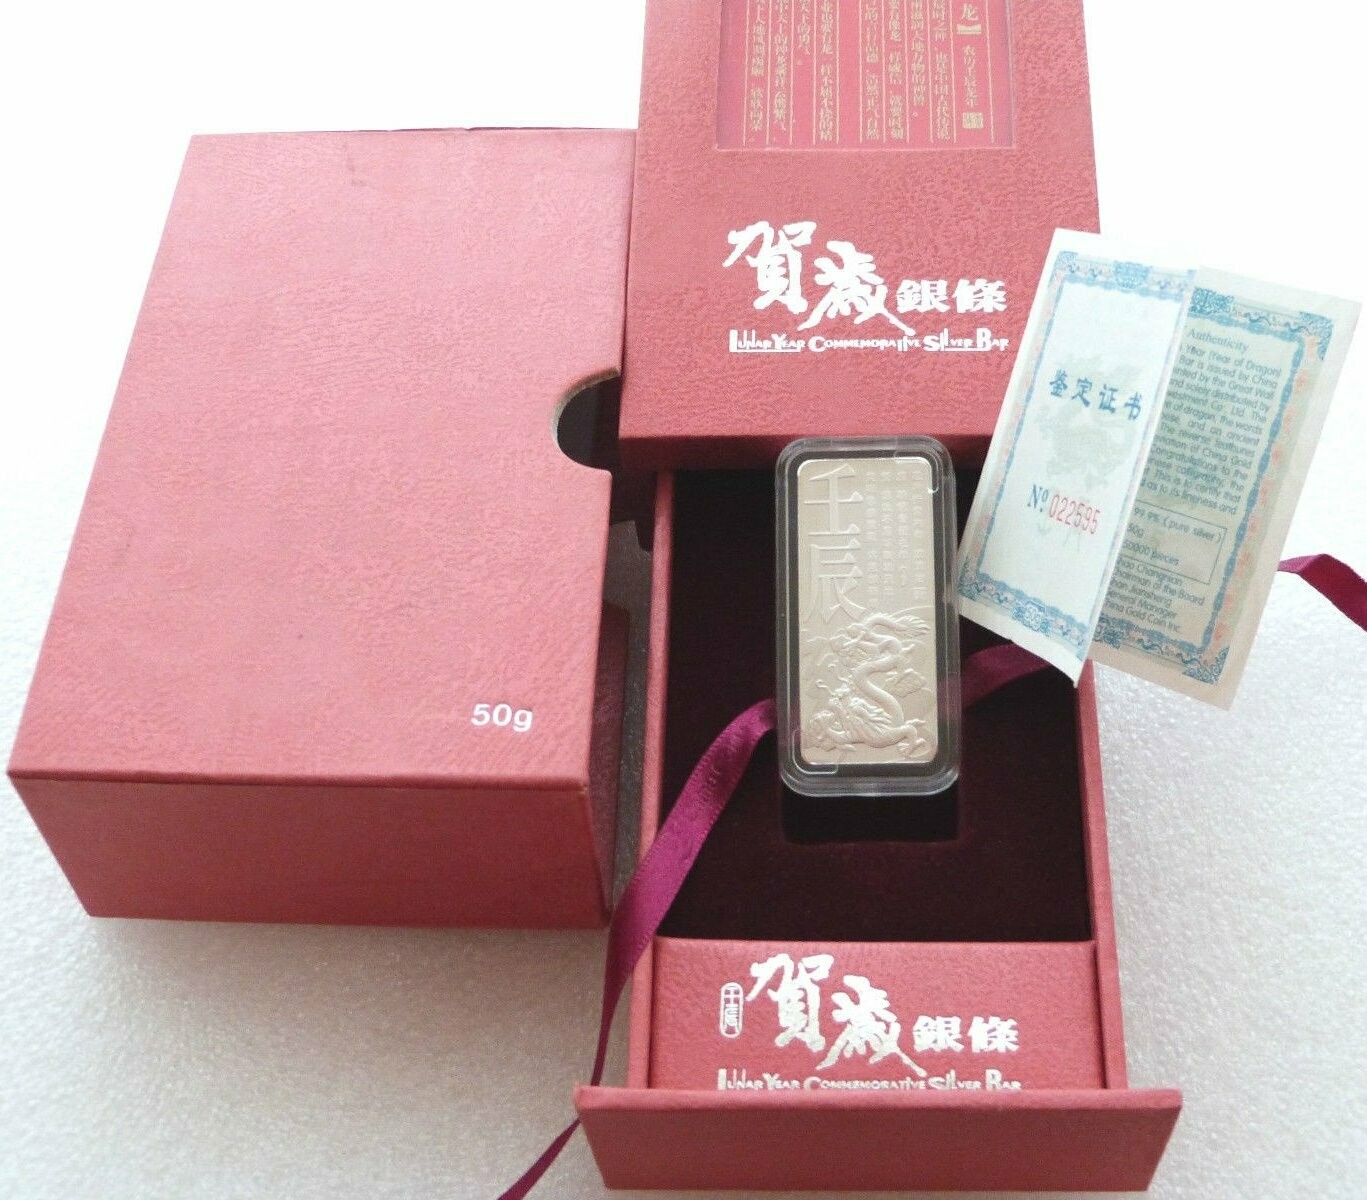 2012 China Lunar Dragon 50 Gram Silver Bar Ingot Box Coa